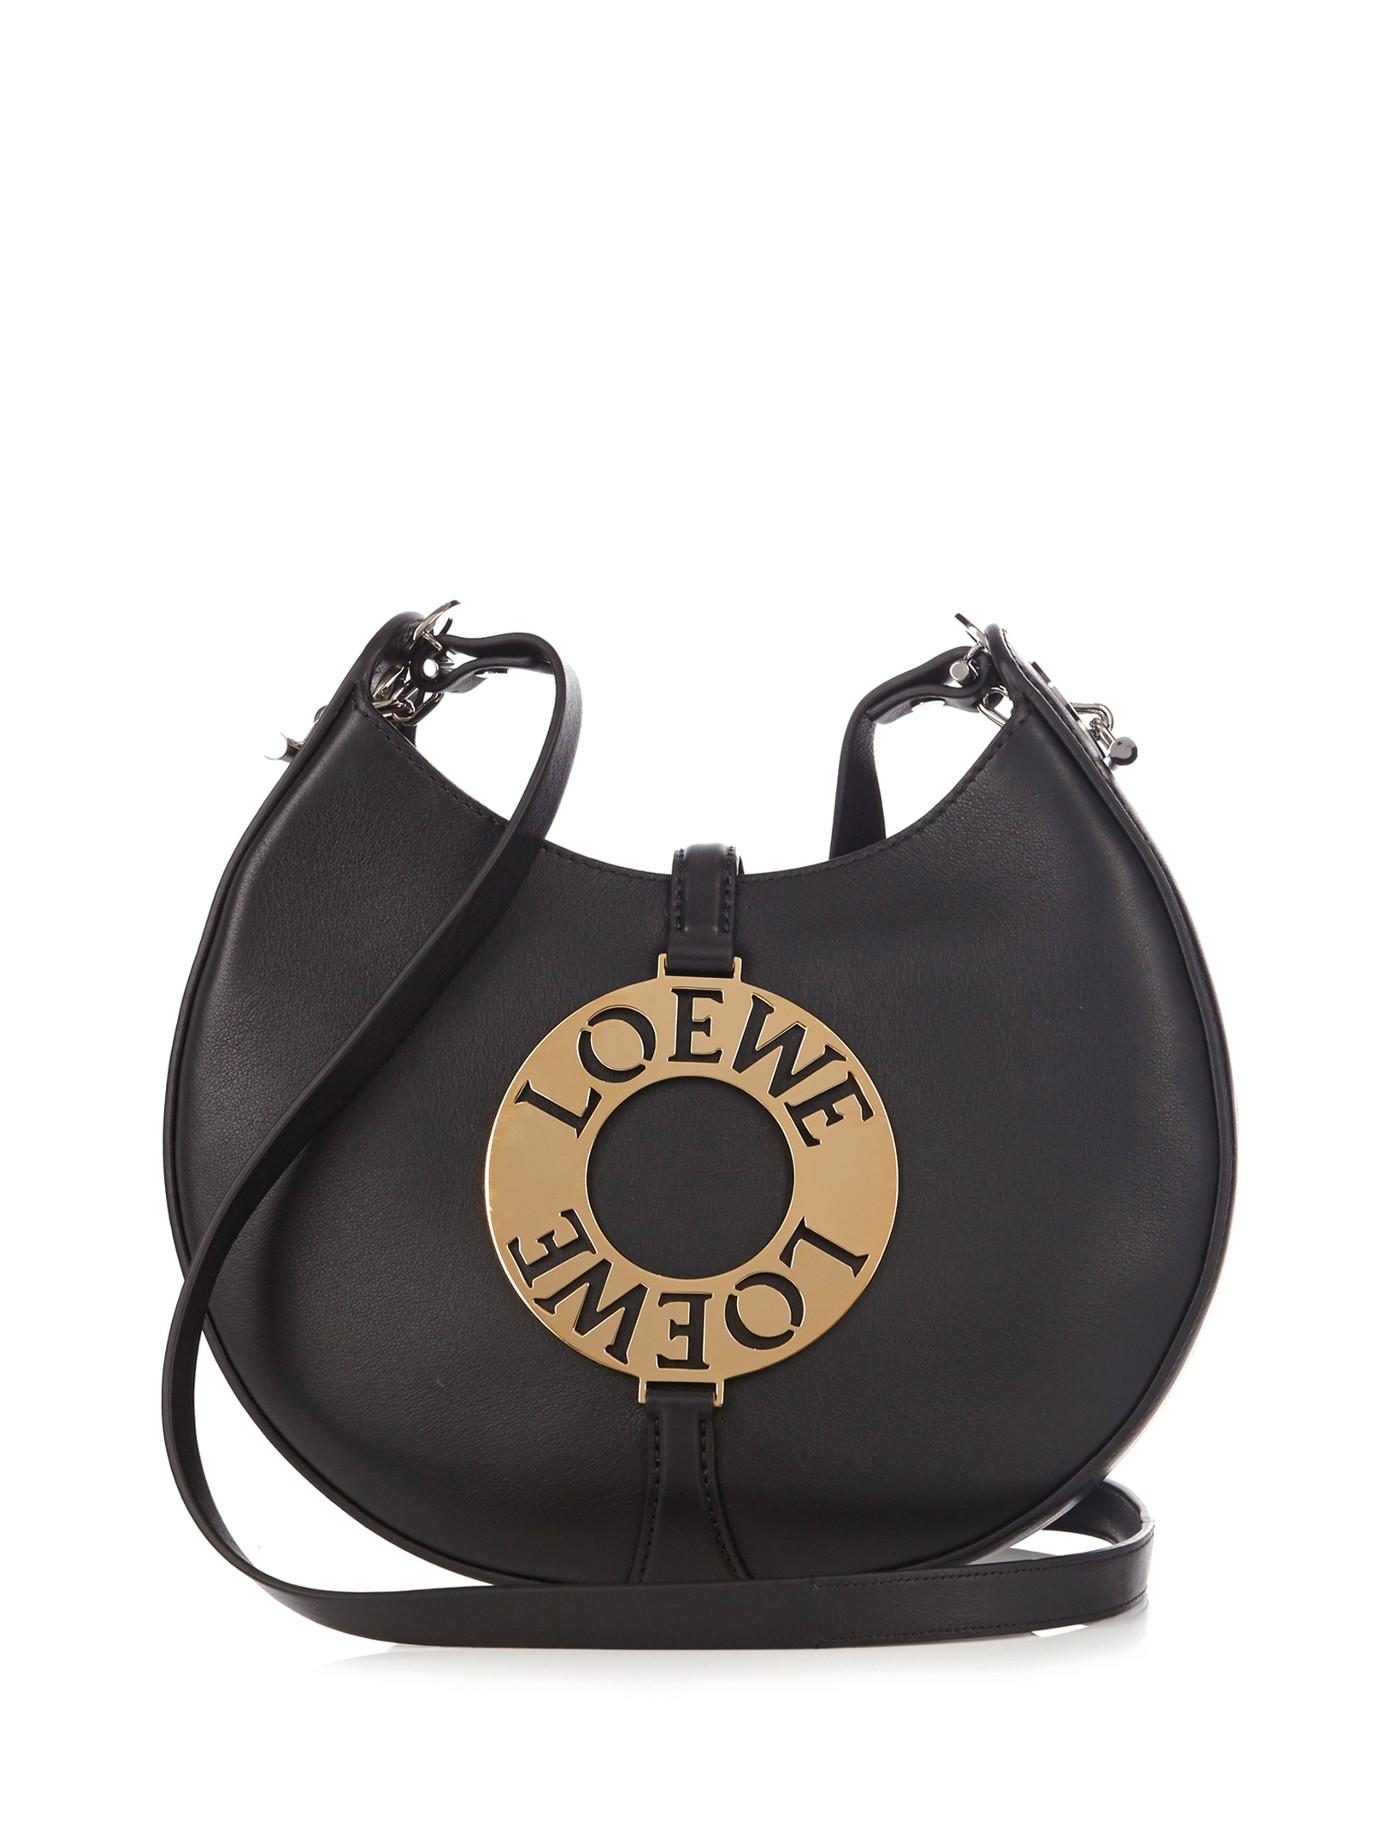 Loewe Joyce Small Leather Cross-body Bag in Black | Lyst